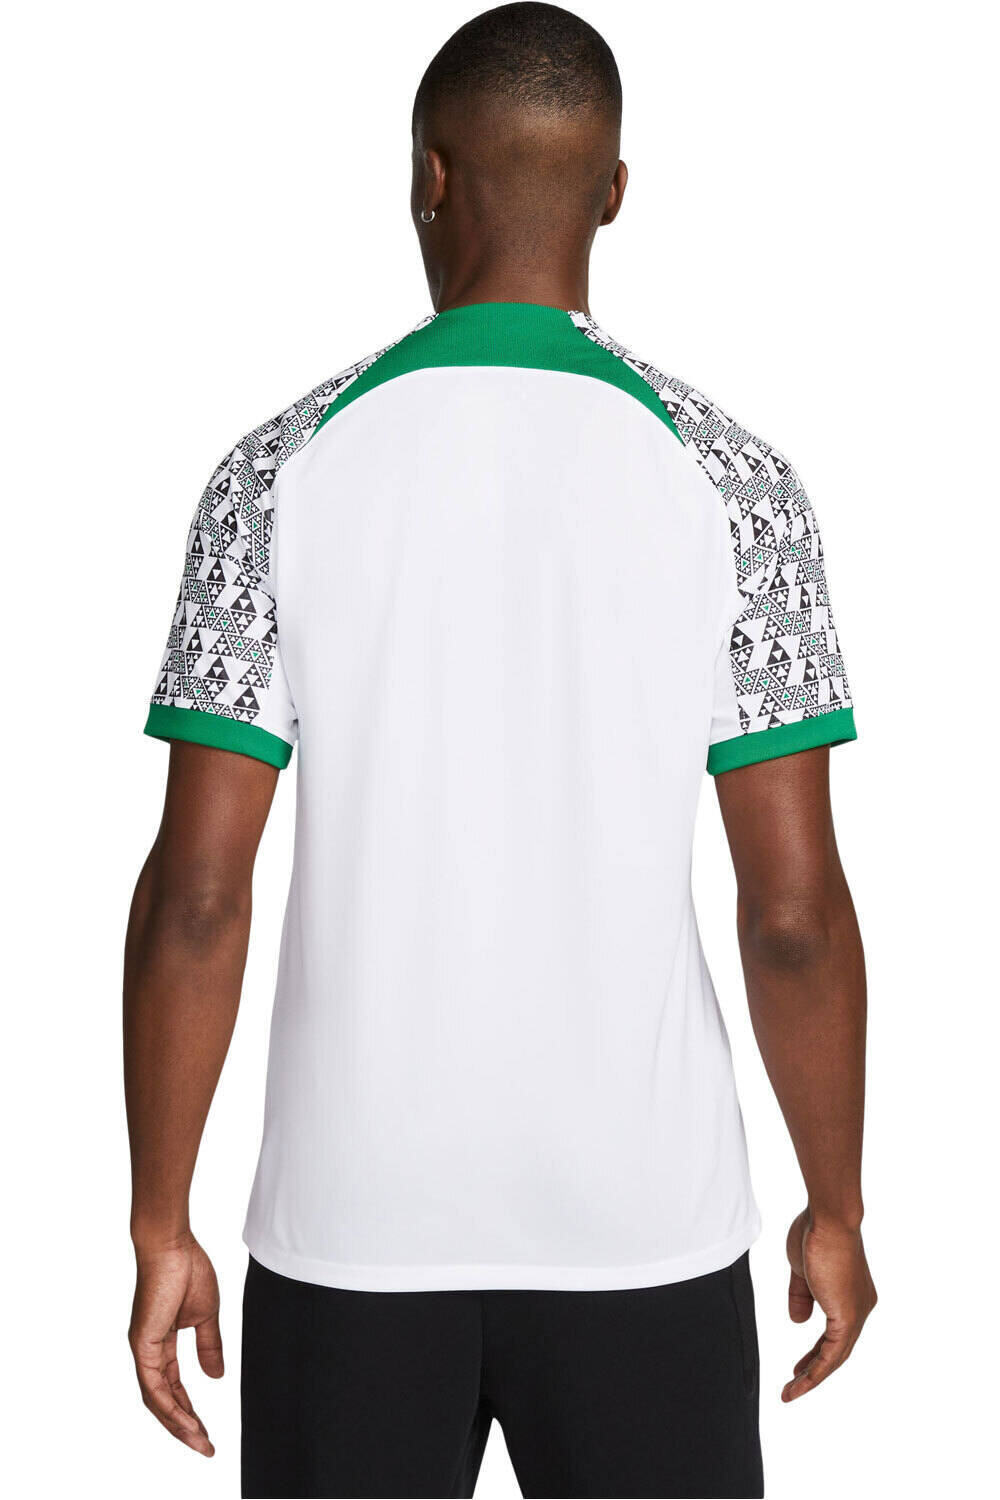 Nike camiseta de fútbol oficiales CAMISETA NIGERIA SEGUNDA EQUIPACION 2022 vista trasera